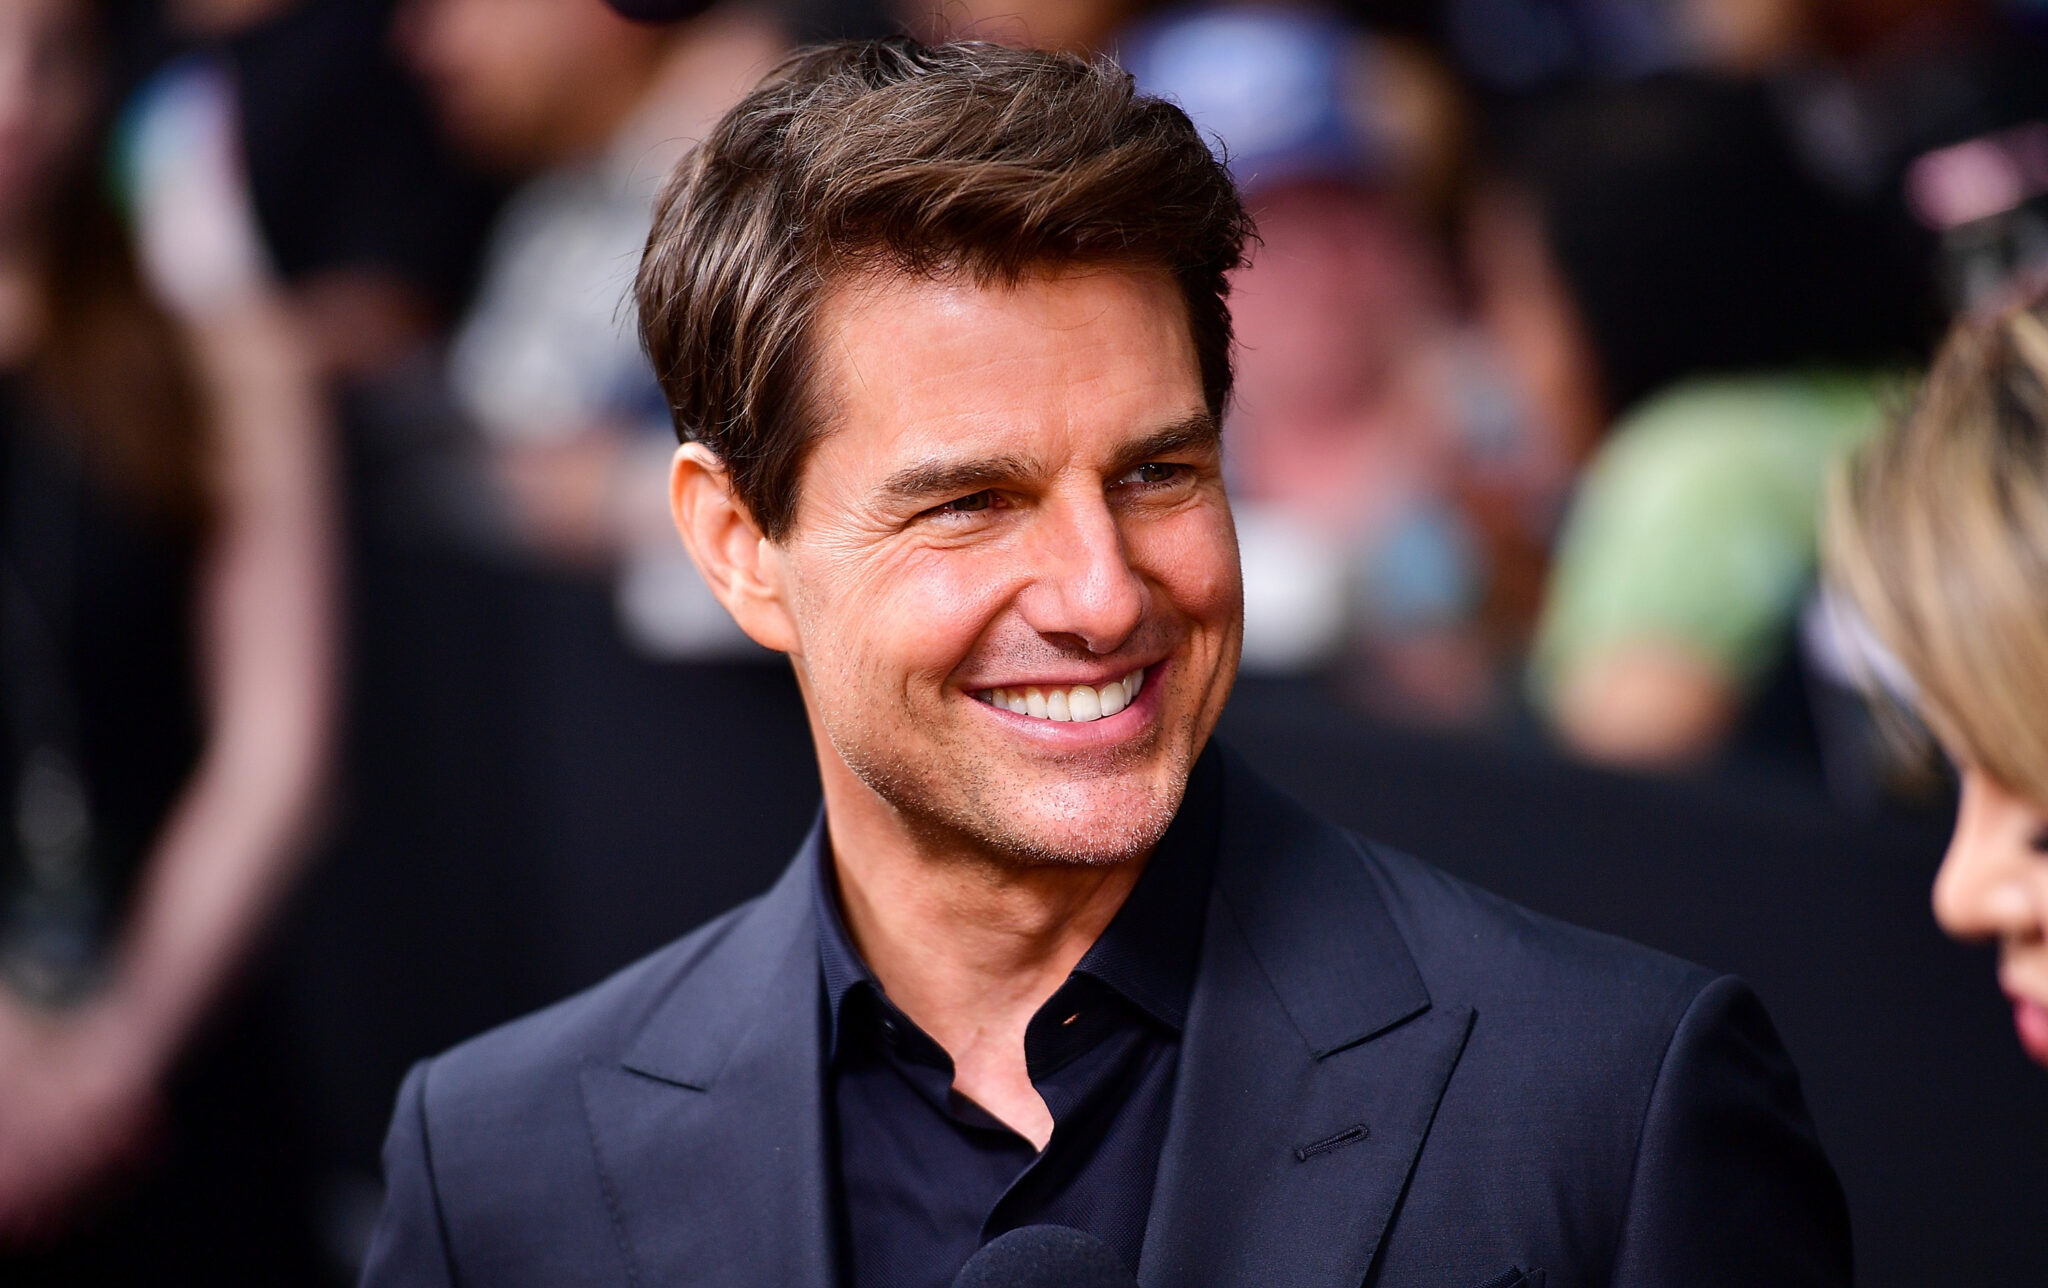 Tom Cruise Net Worth in 2020, Age, Height, Weight, Wife, Bio, Wiki